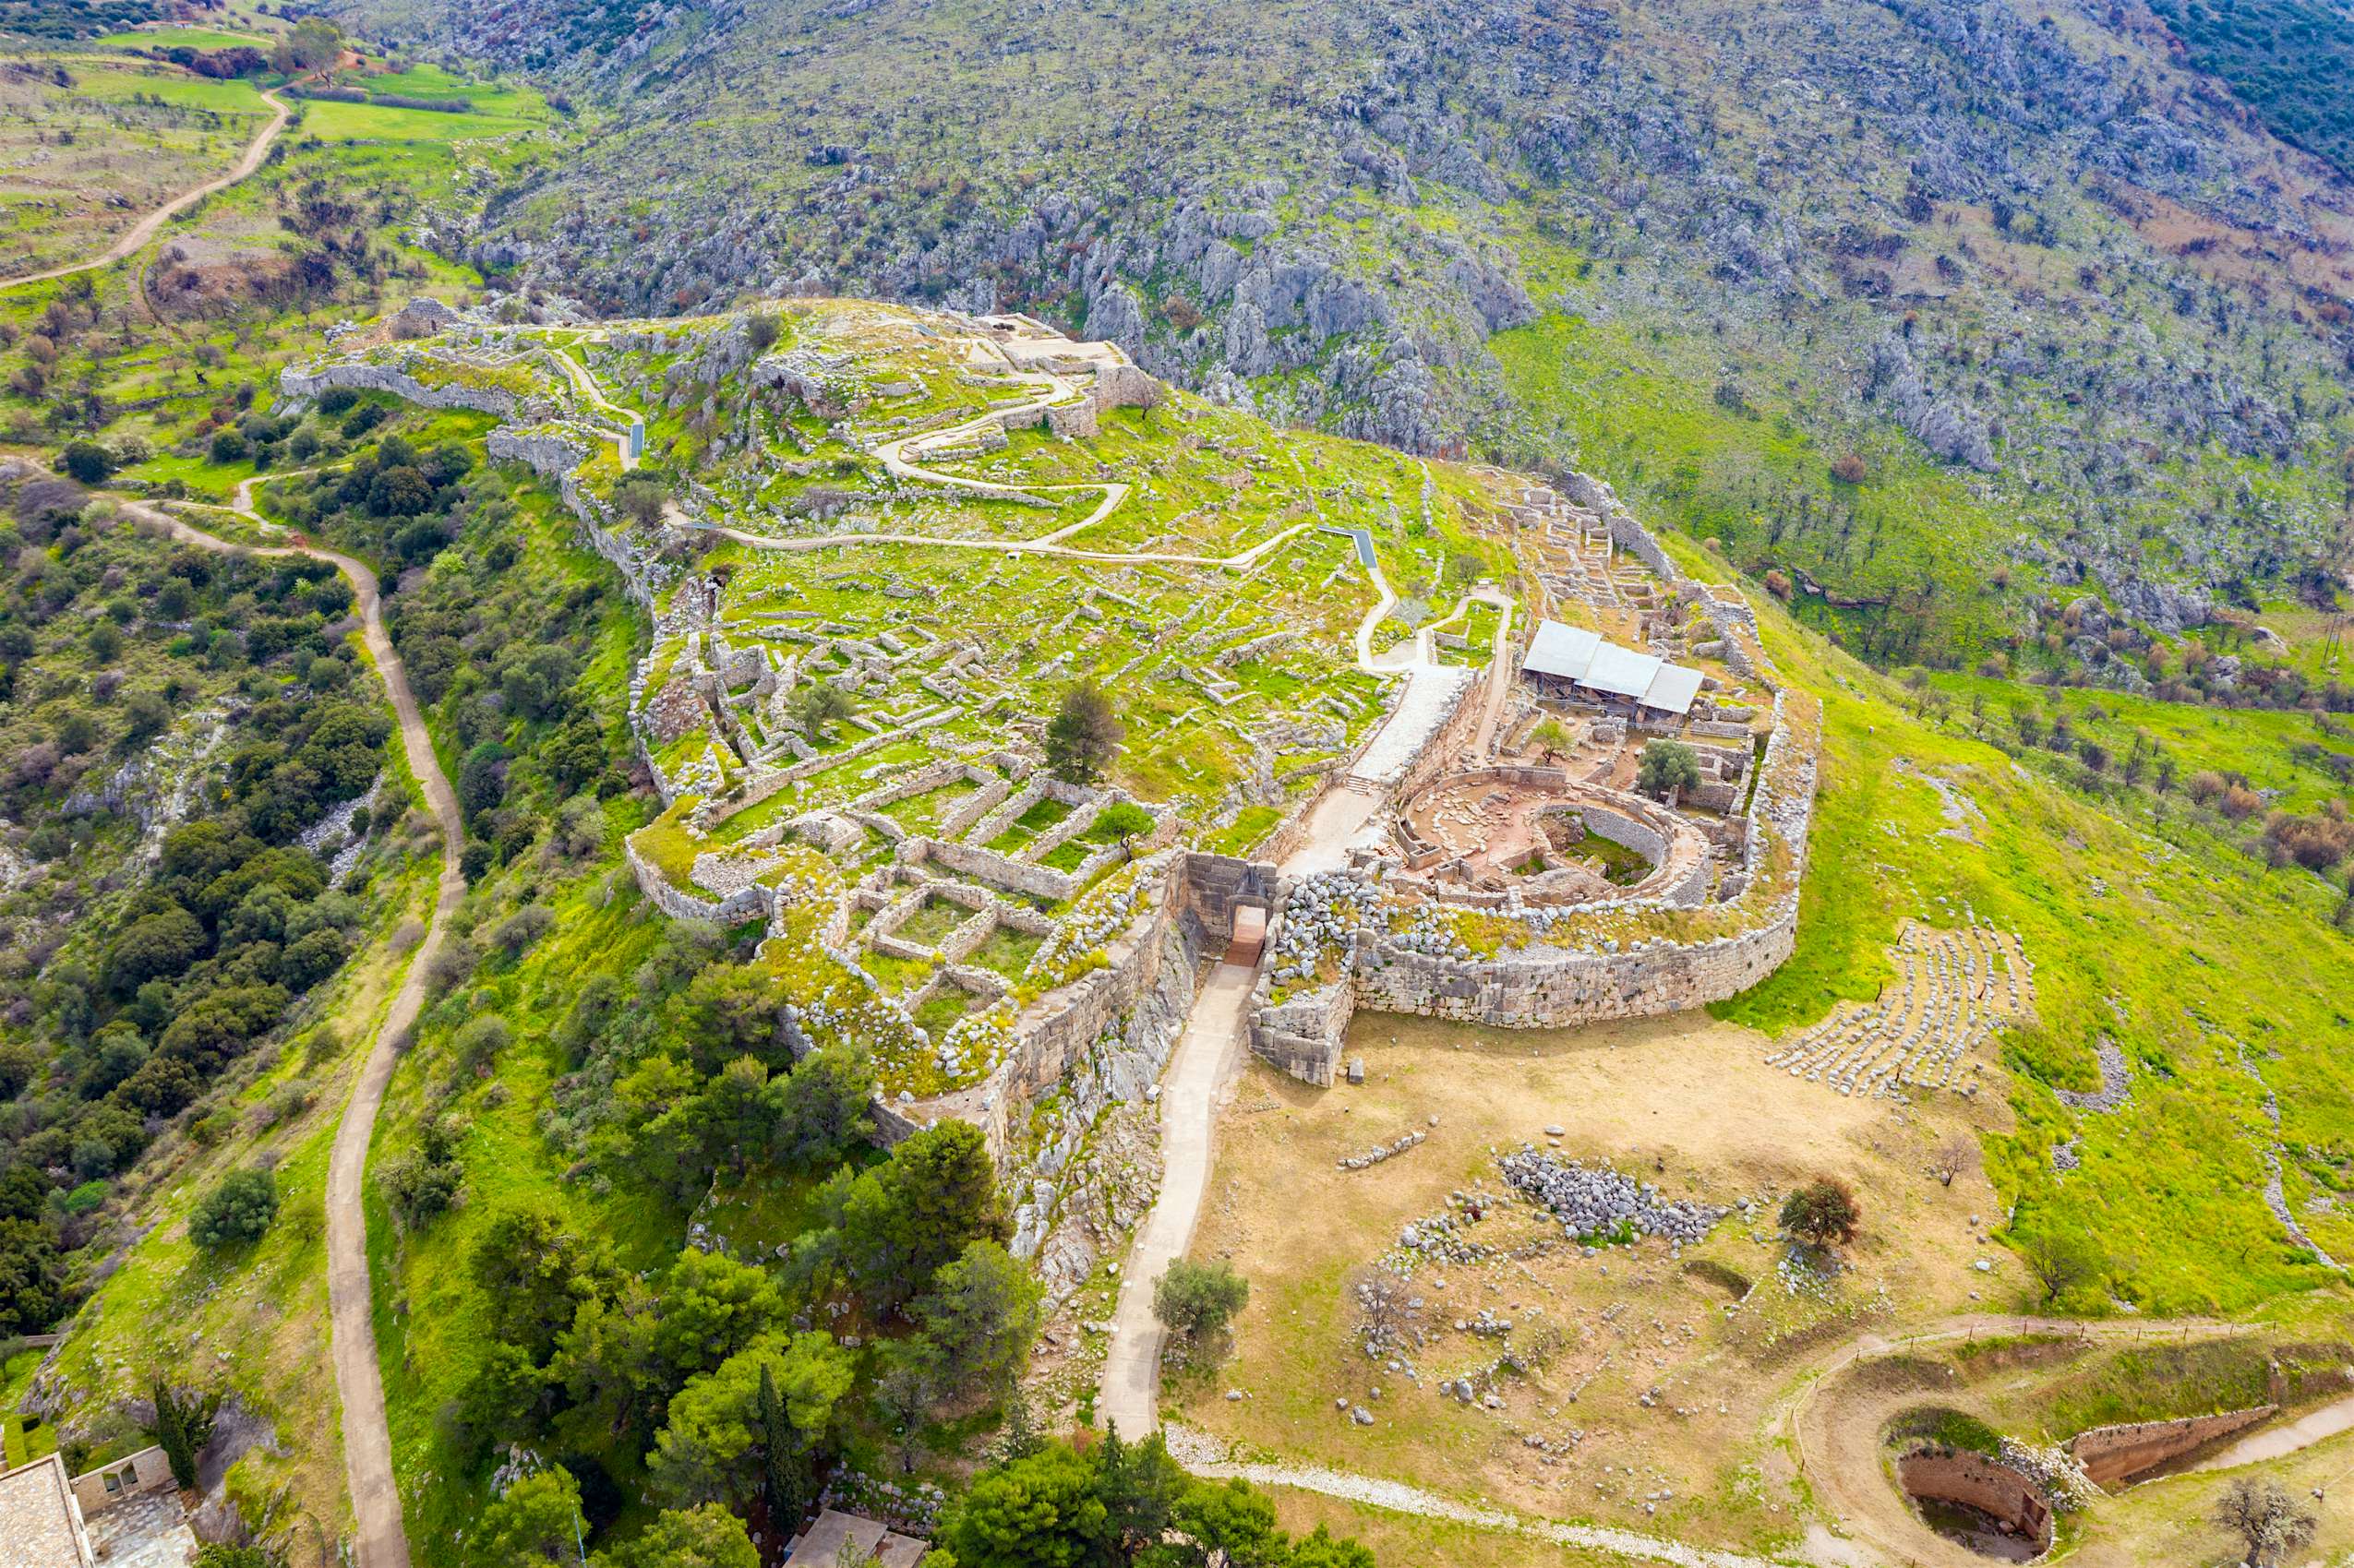 Mycenae Aerial View Greece ?auto=format&fit=crop&sharp=10&vib=20&ixlib=react 8.6.4&w=850&q=35&dpr=3